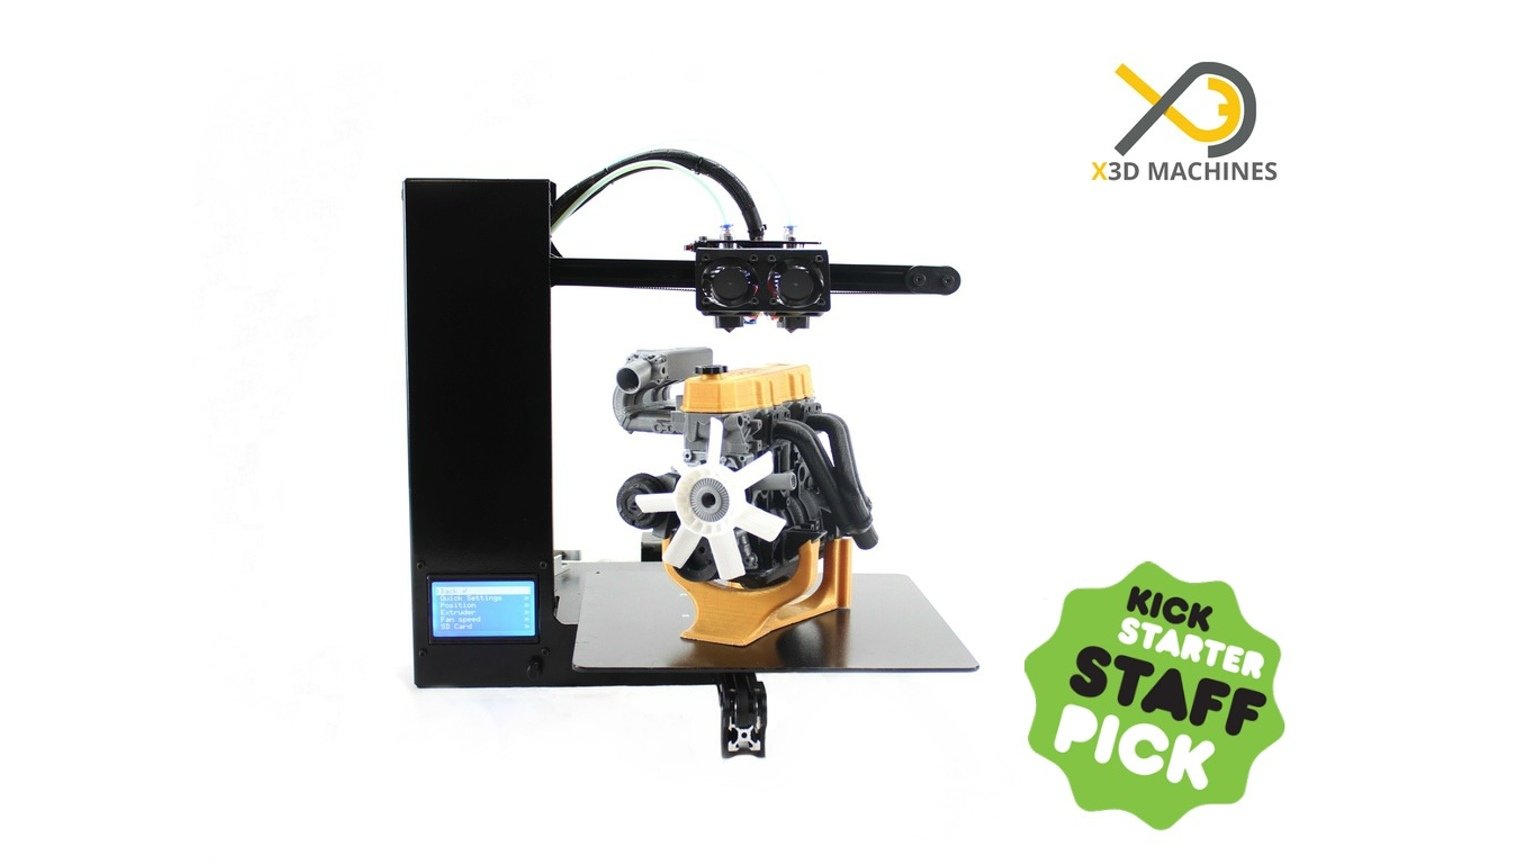  The XMachine Genesis Duo desktop 3D printer 